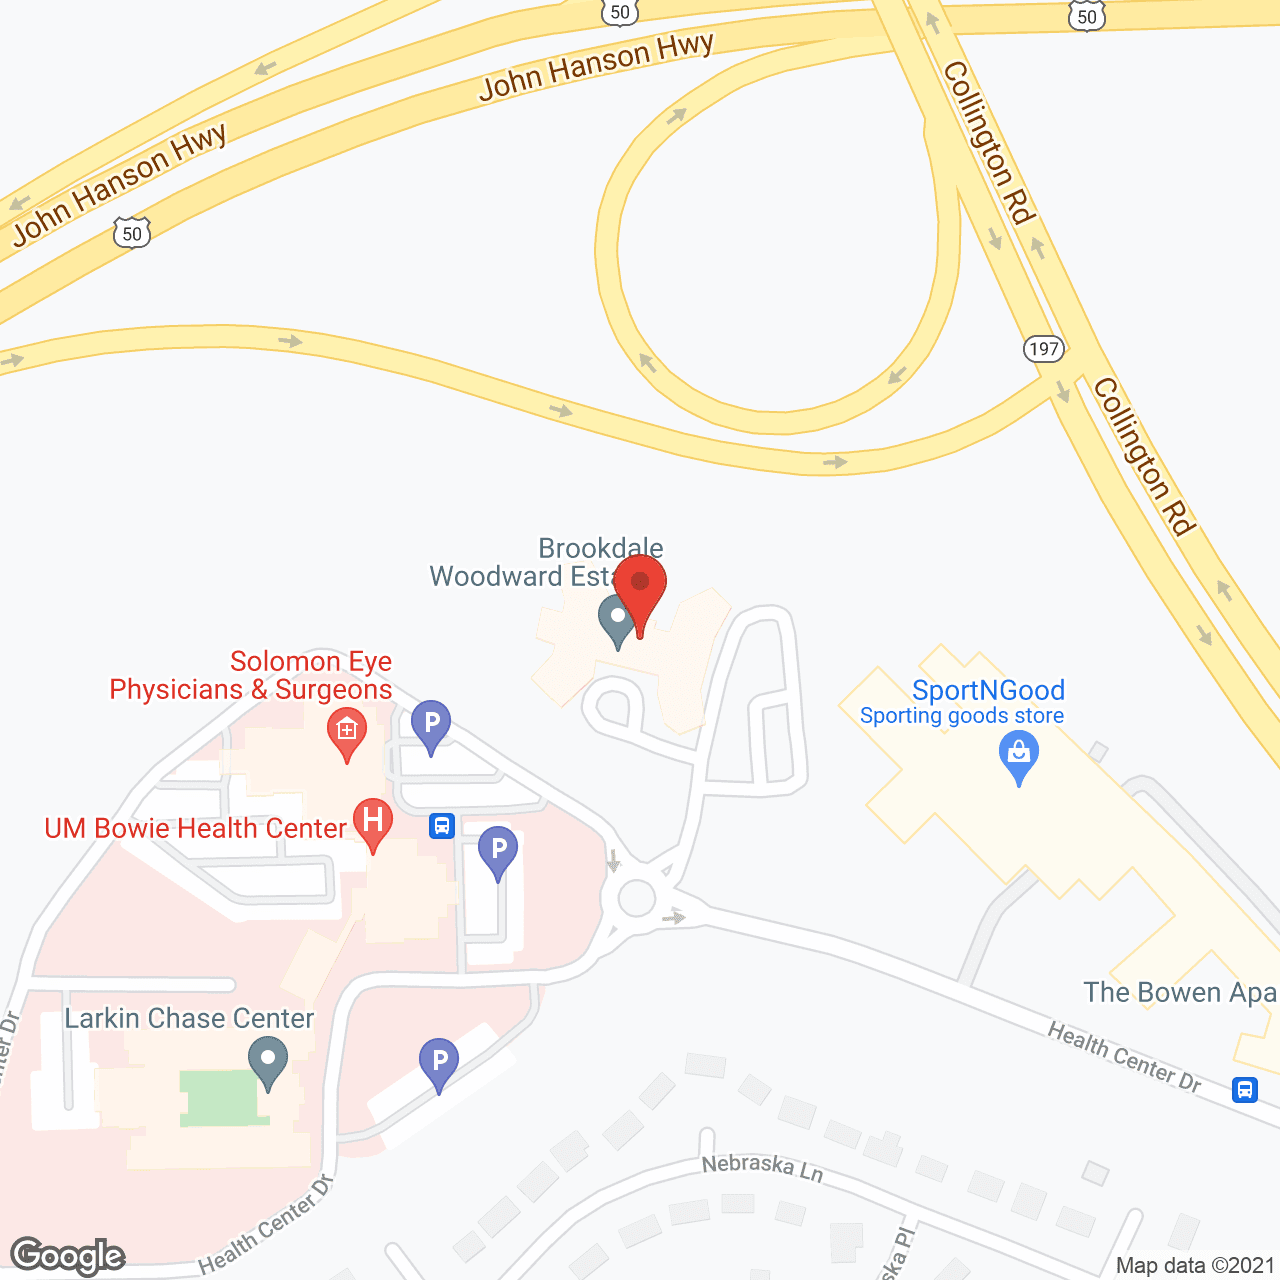 Brookdale Woodward Estates in google map